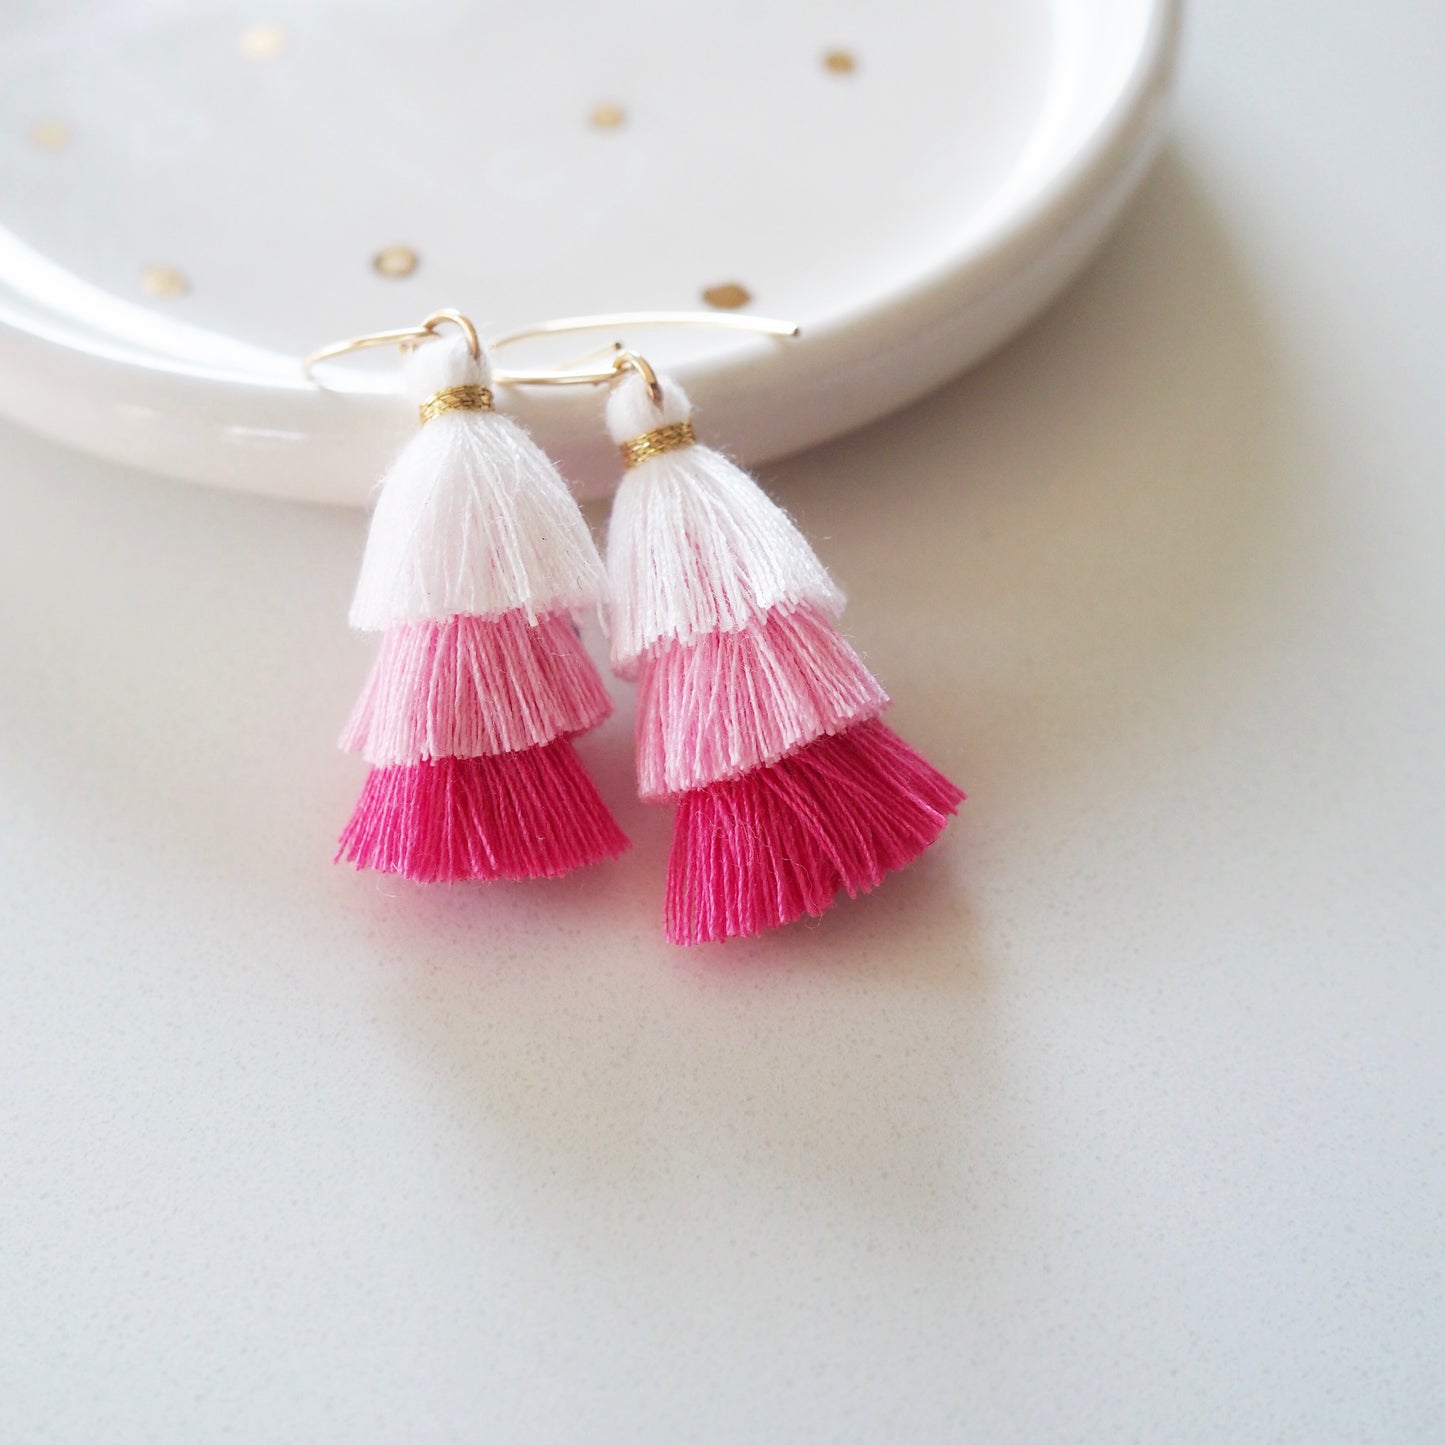 pink tassel earrings with gold earwires